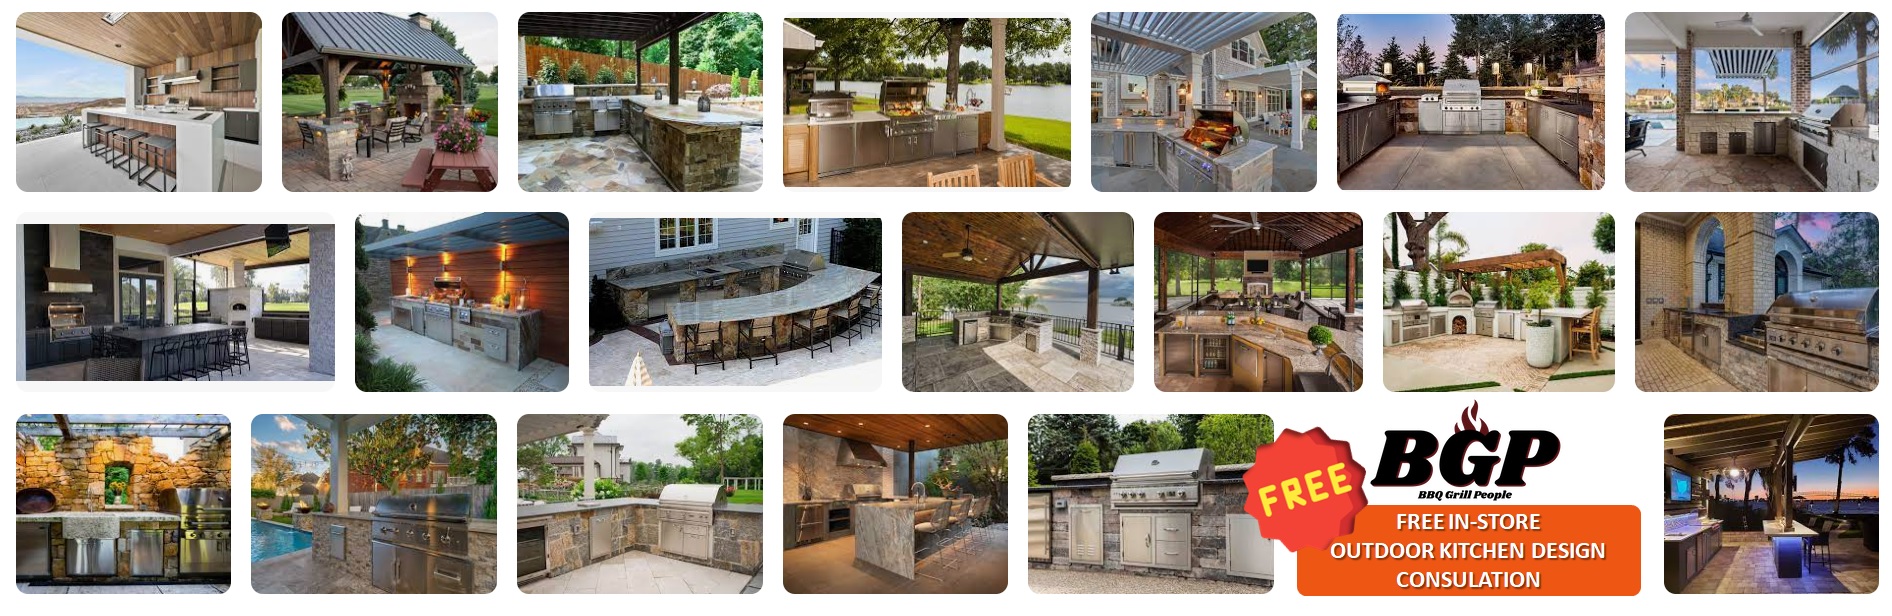 FREE Outdoor Kitchen Design - FREE Outdoor Kitchen Design Consultation - BBQ Grill People